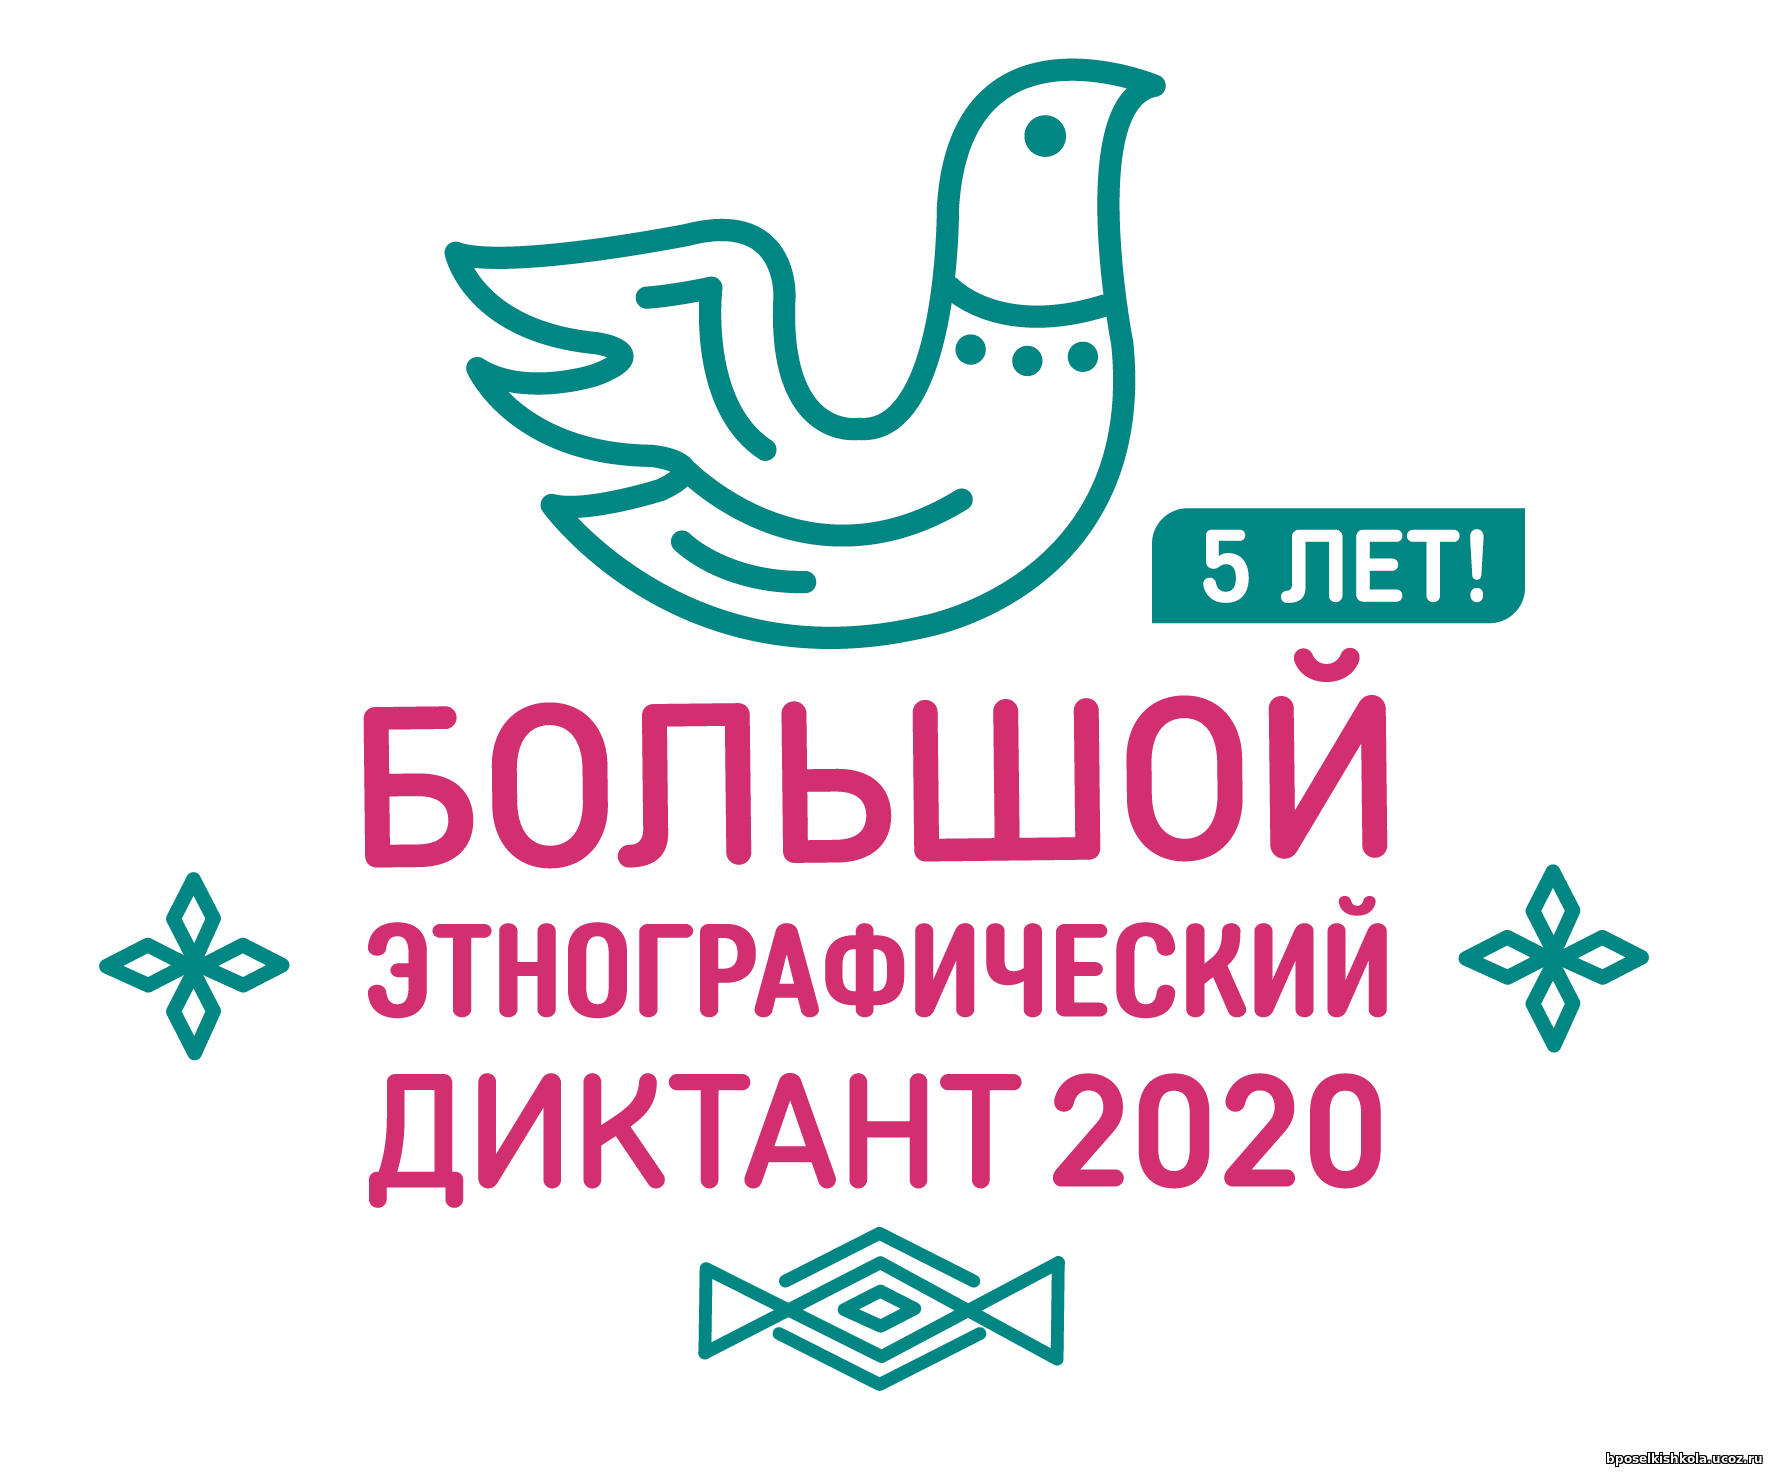 novyj logotip 2020 1